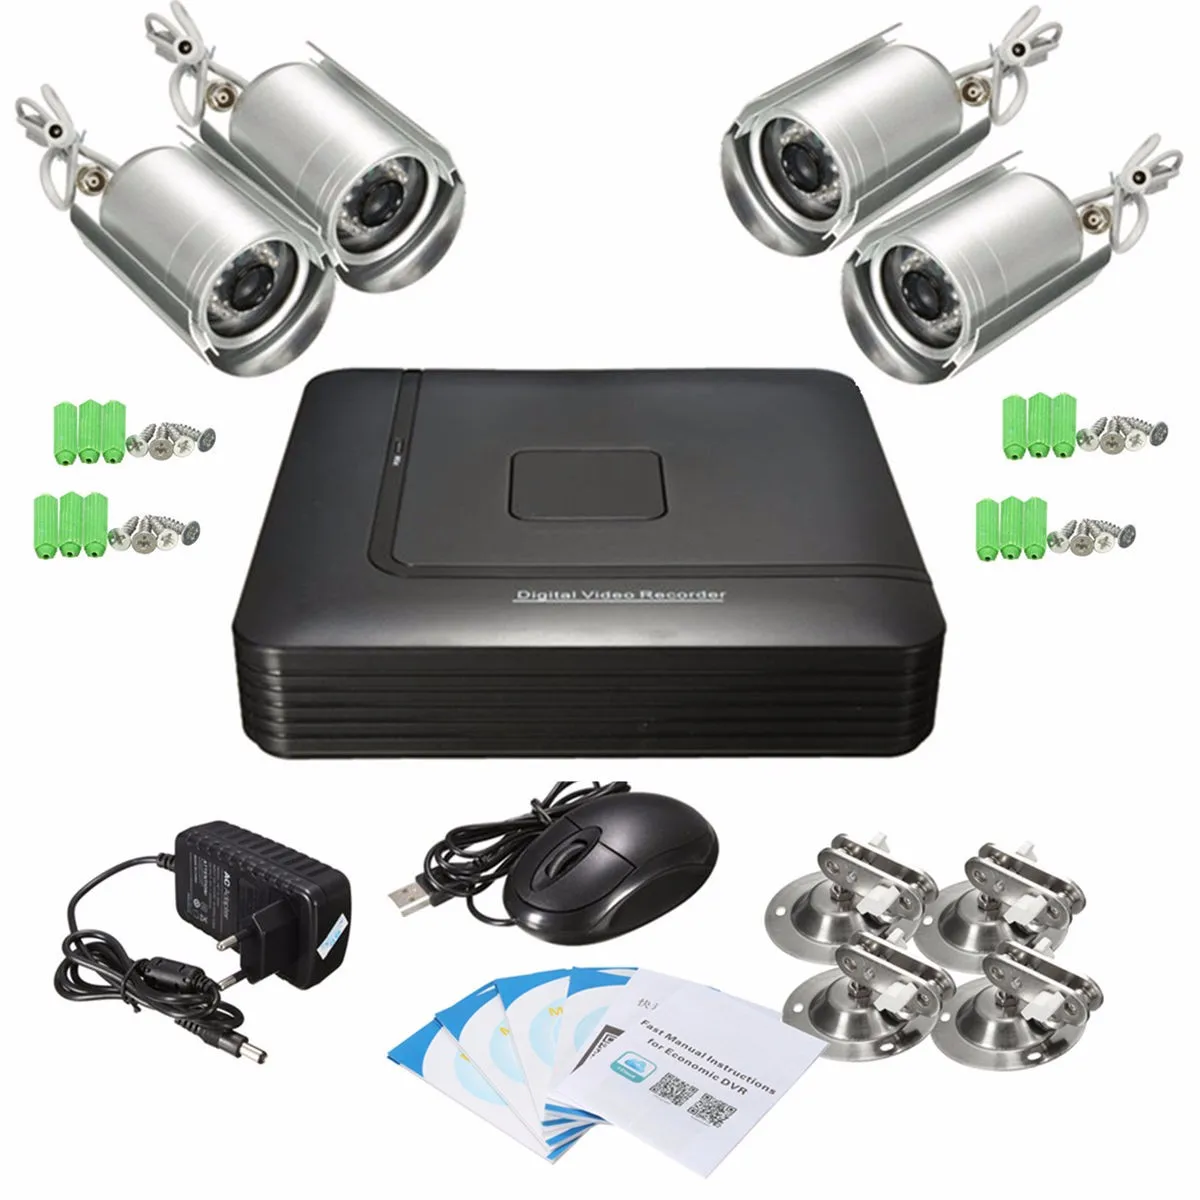 NEW H.264 8CH CCTV DVR 1300TVL Surveillance Security System With 4 IR Night Camera Home Security Surveillance Kit